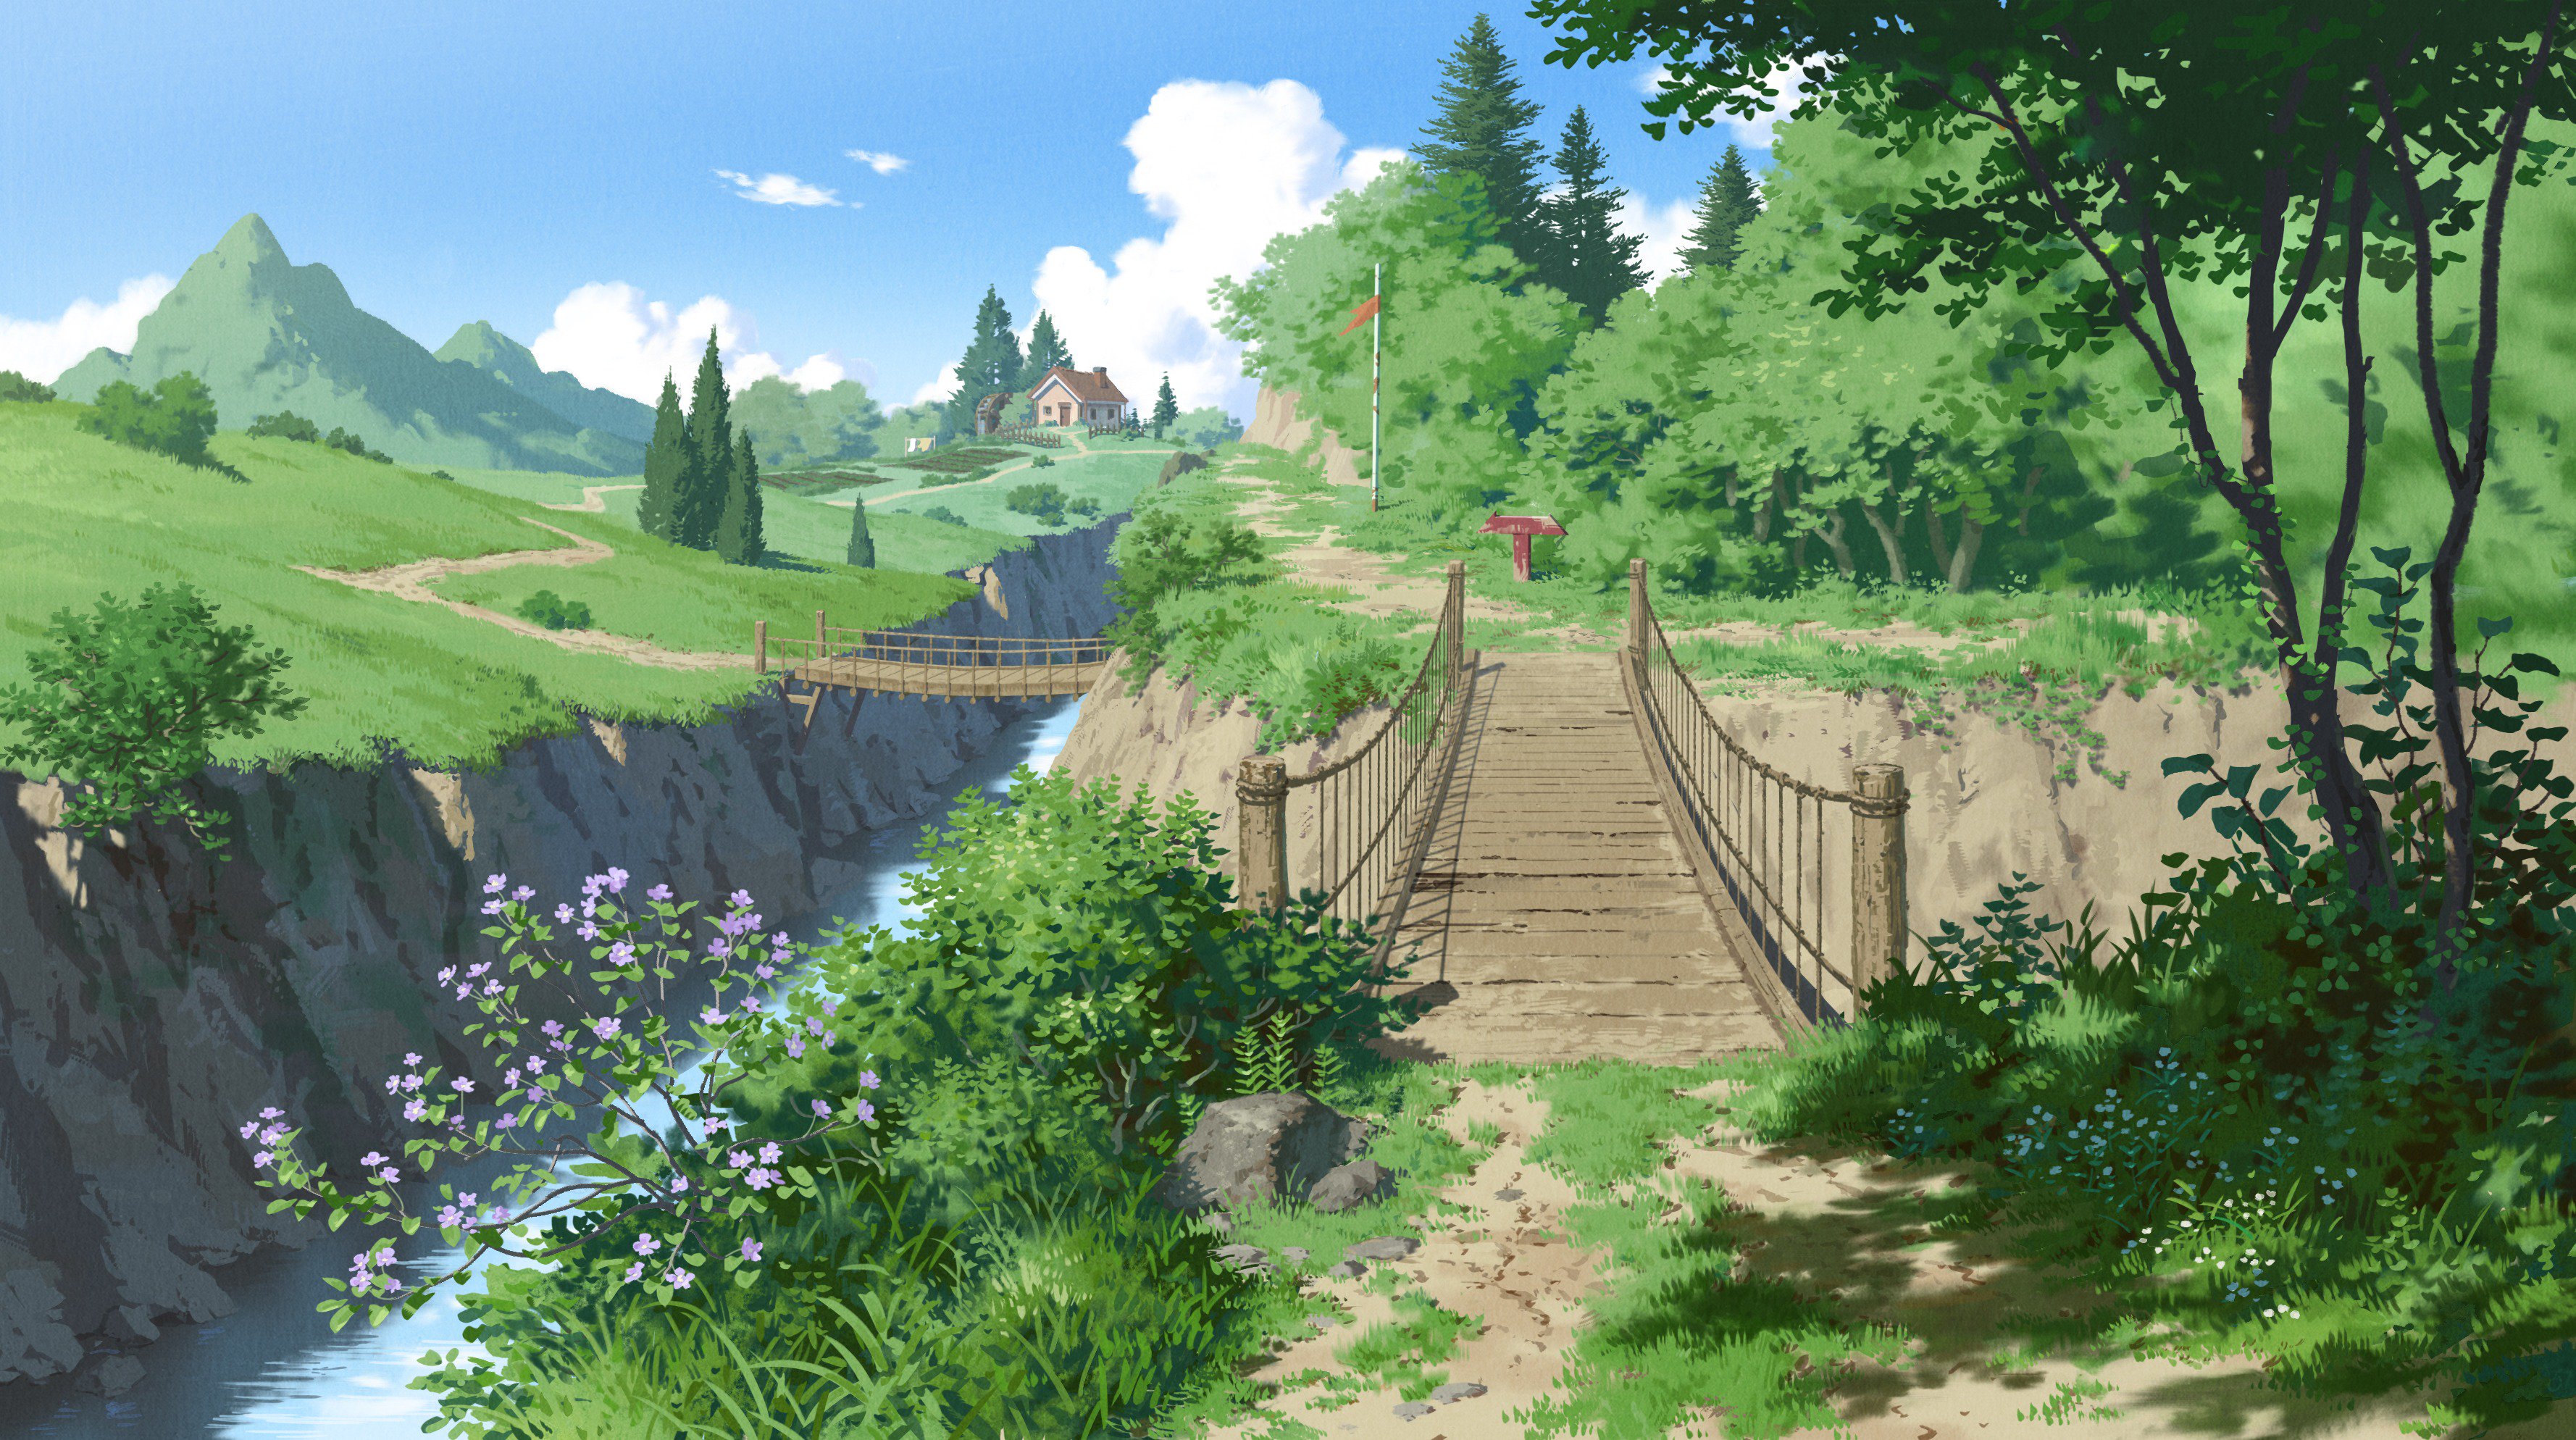 Anime 3556x1988 nature digital art forest trees bridge house grass flowers path